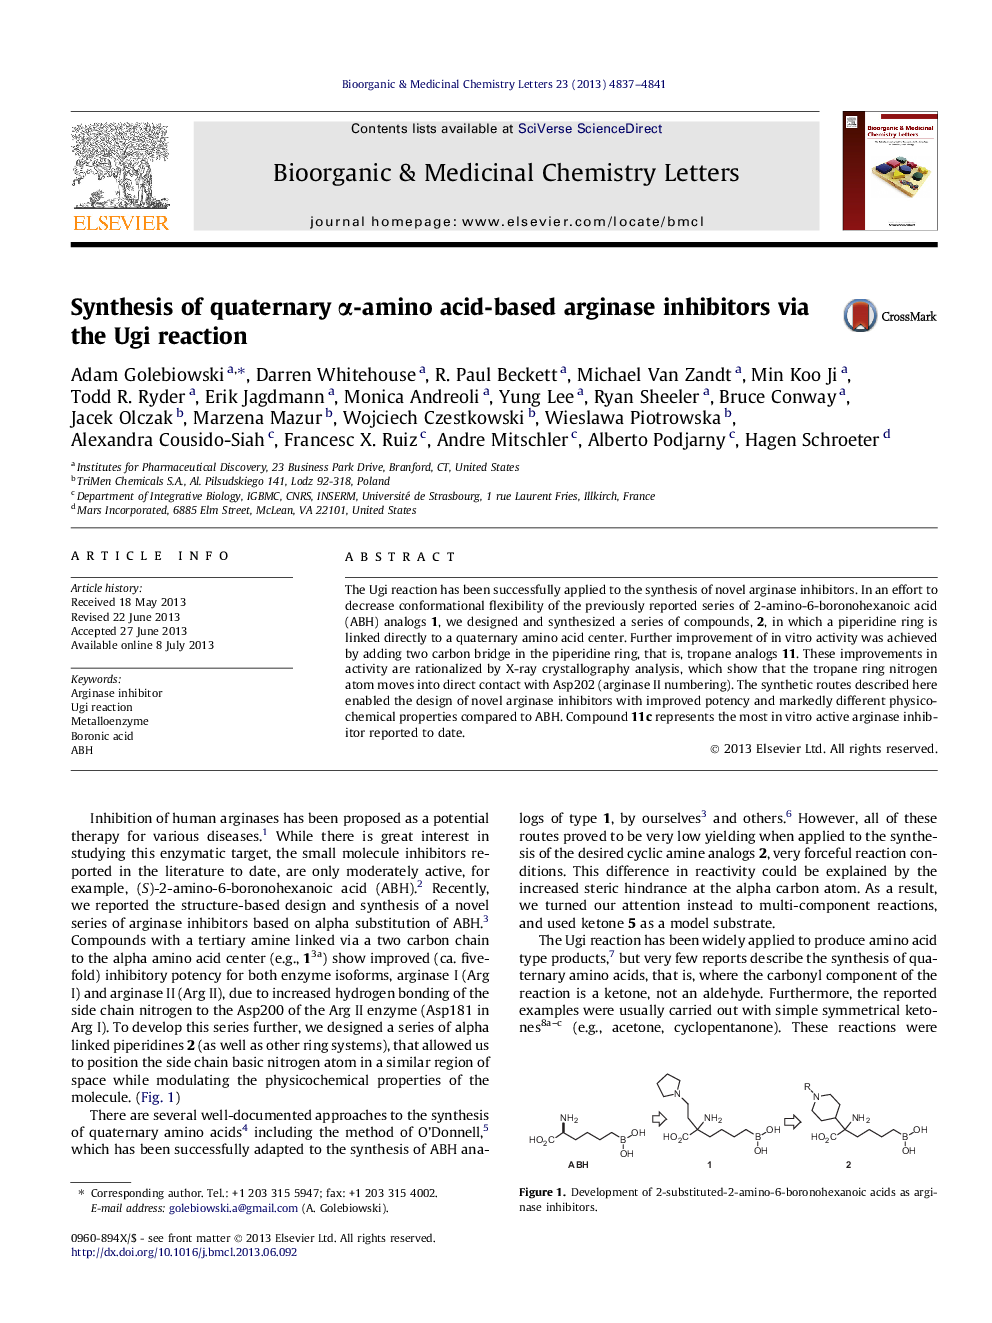 Synthesis of quaternary Î±-amino acid-based arginase inhibitors via the Ugi reaction